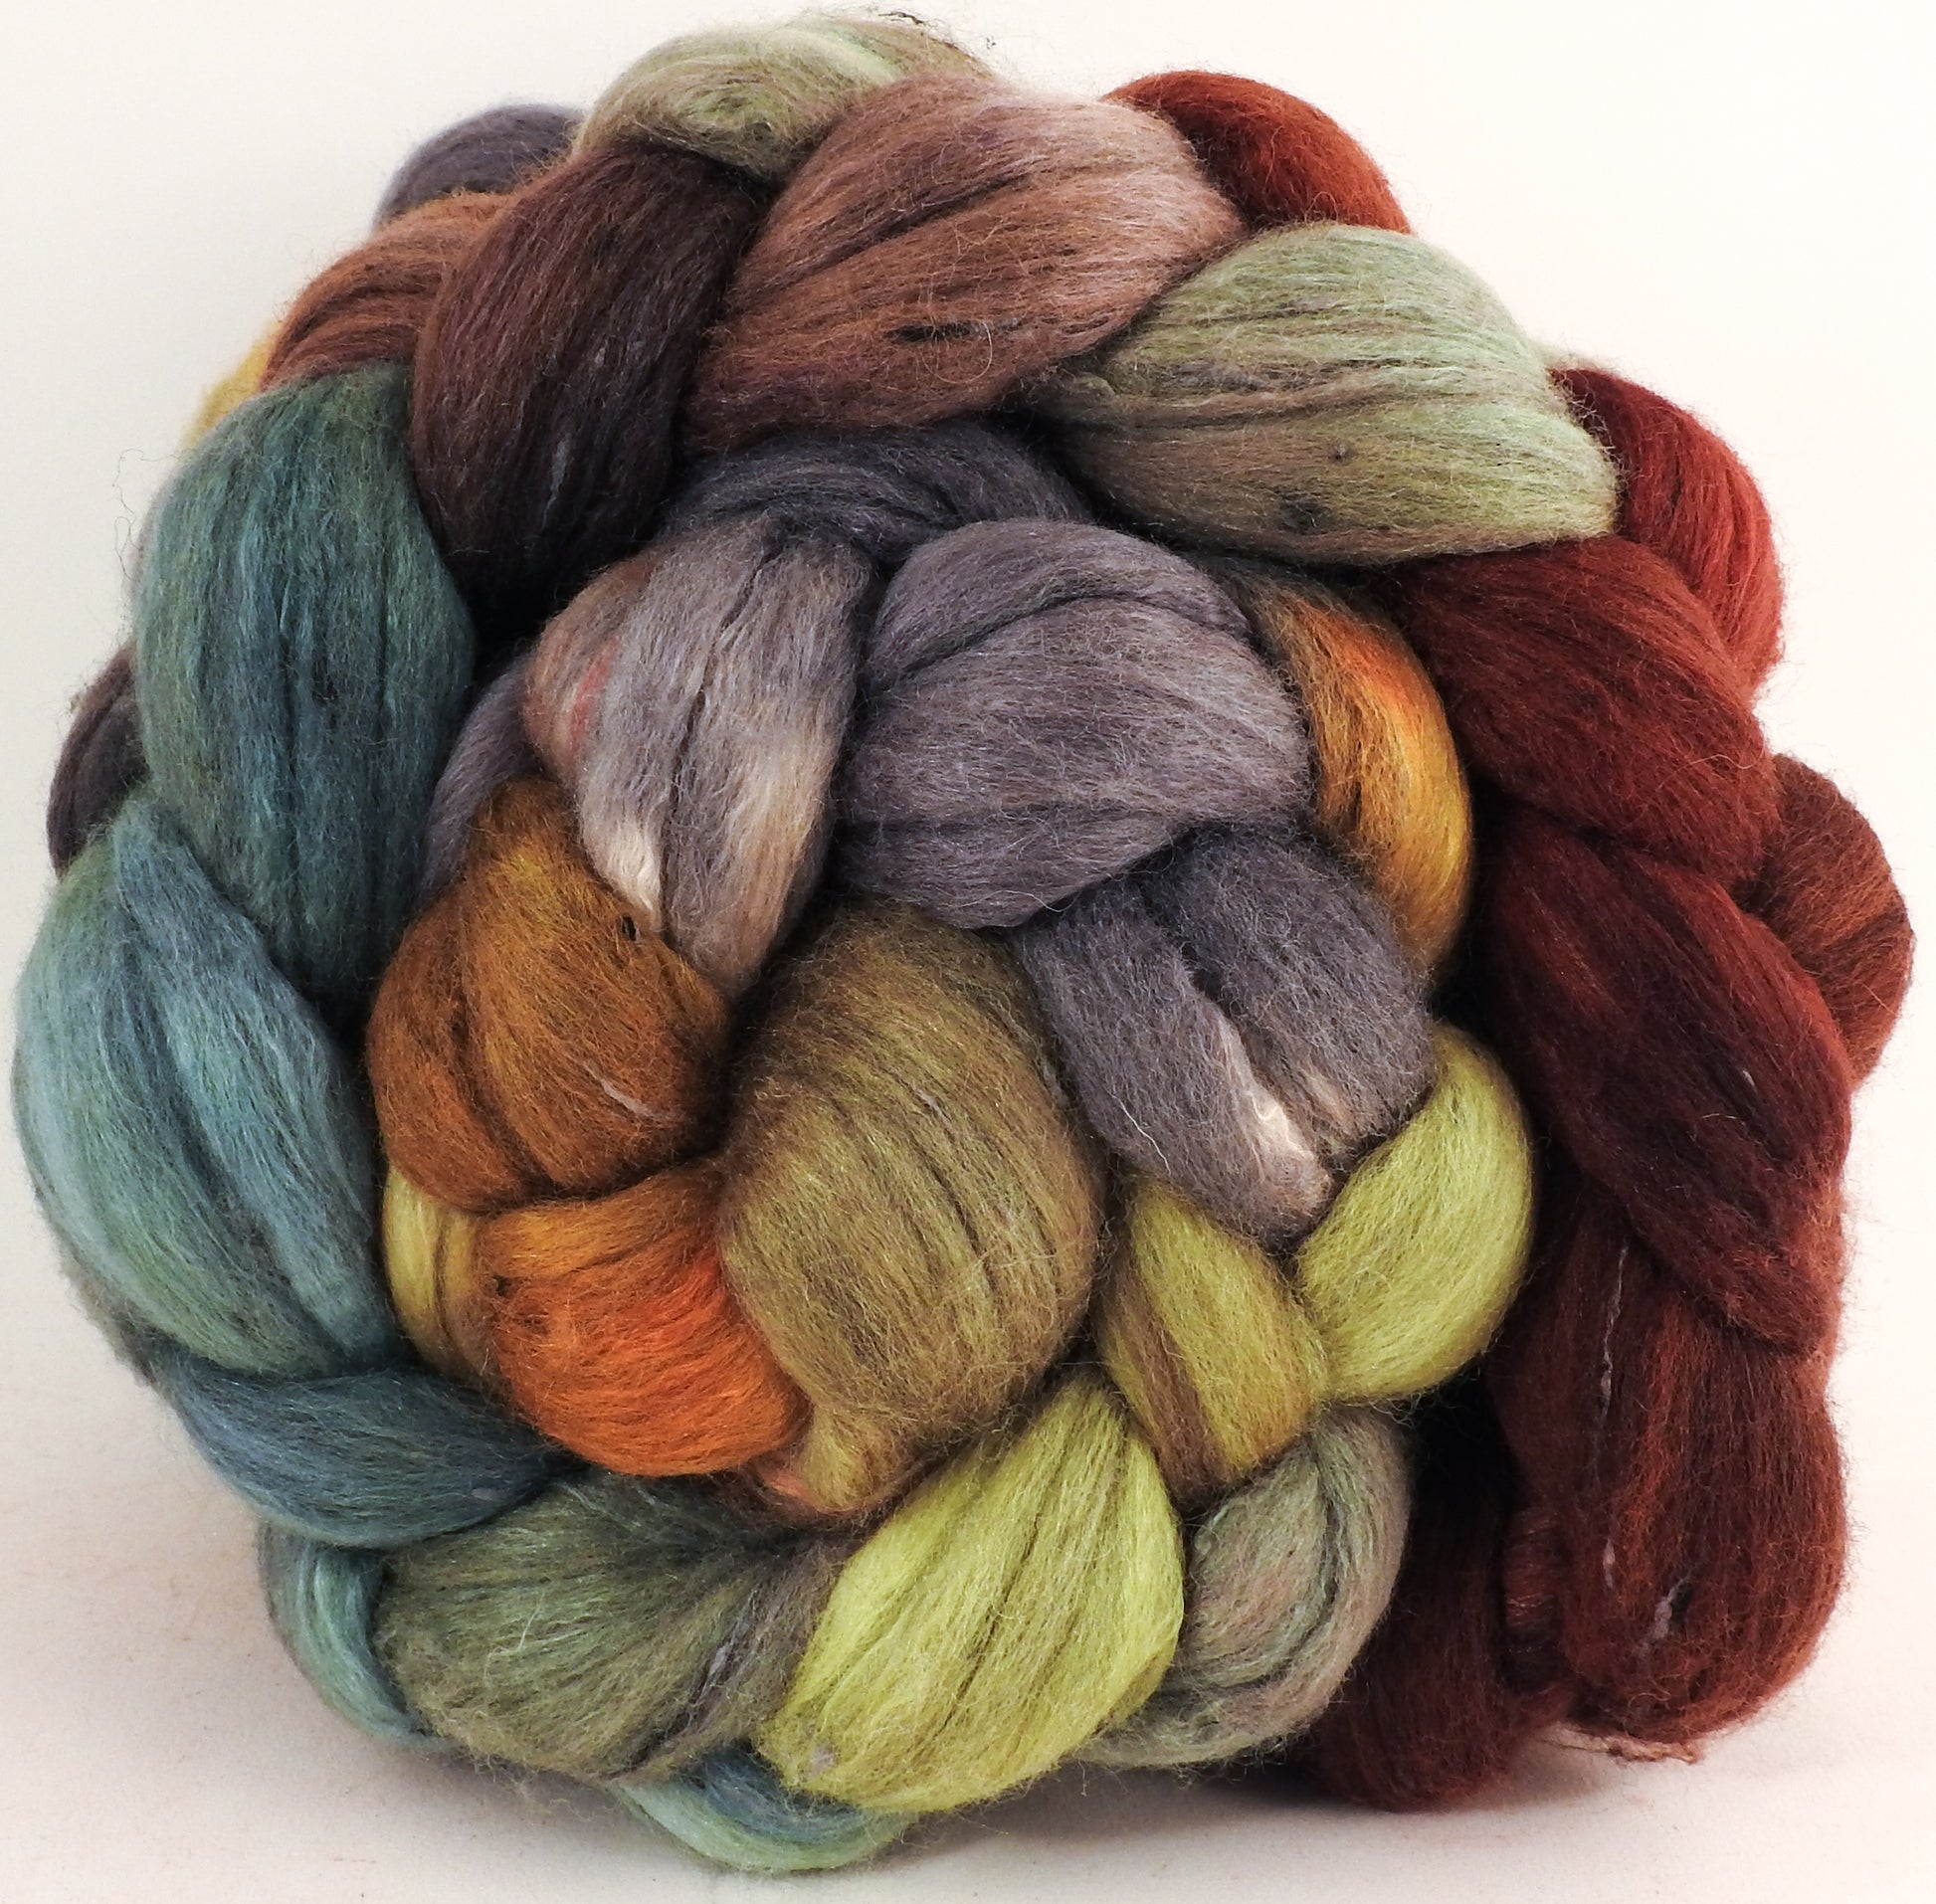 Batt in a Braid #49 -Winter Beech (5.7 oz) - Polwarth/ Mulberry Silk/ Tweed Blend (50/25/25) - Inglenook Fibers